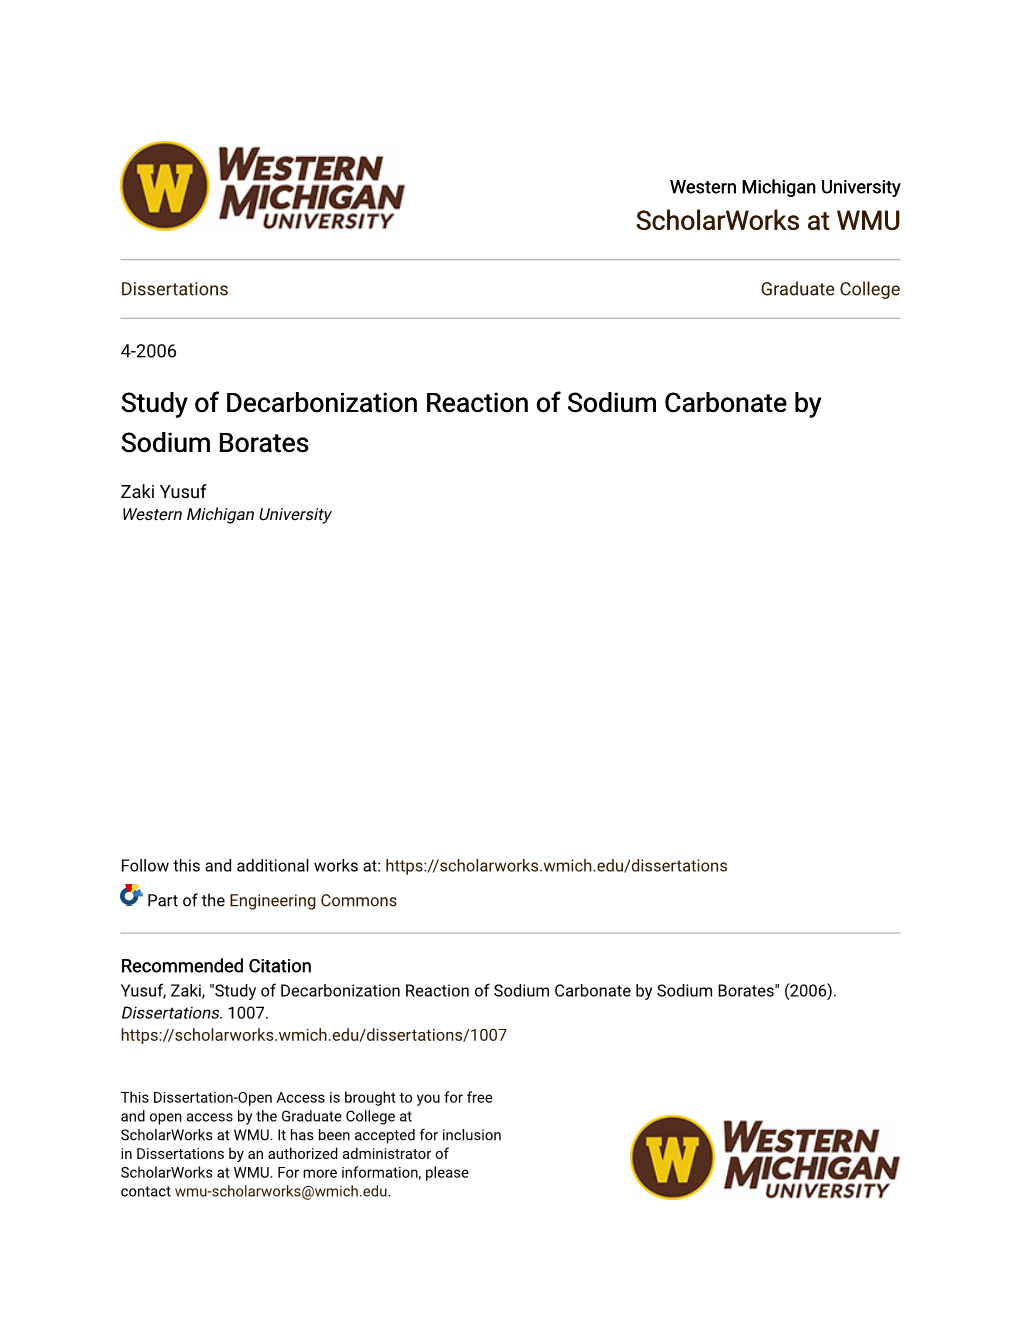 Study of Decarbonization Reaction of Sodium Carbonate by Sodium Borates